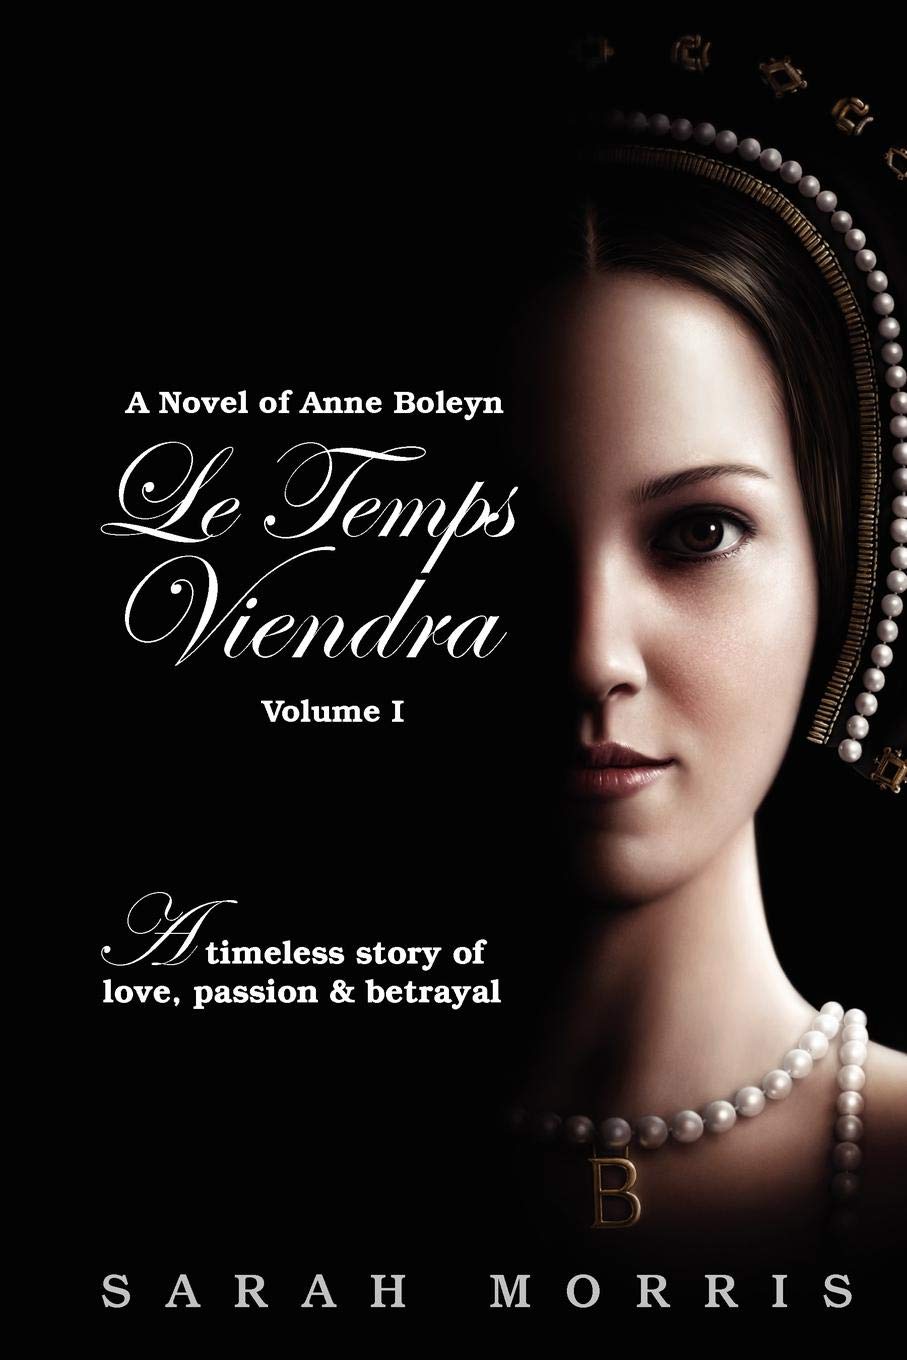 Le Temps Viendra: A Novel of Anne Boleyn Vol 1